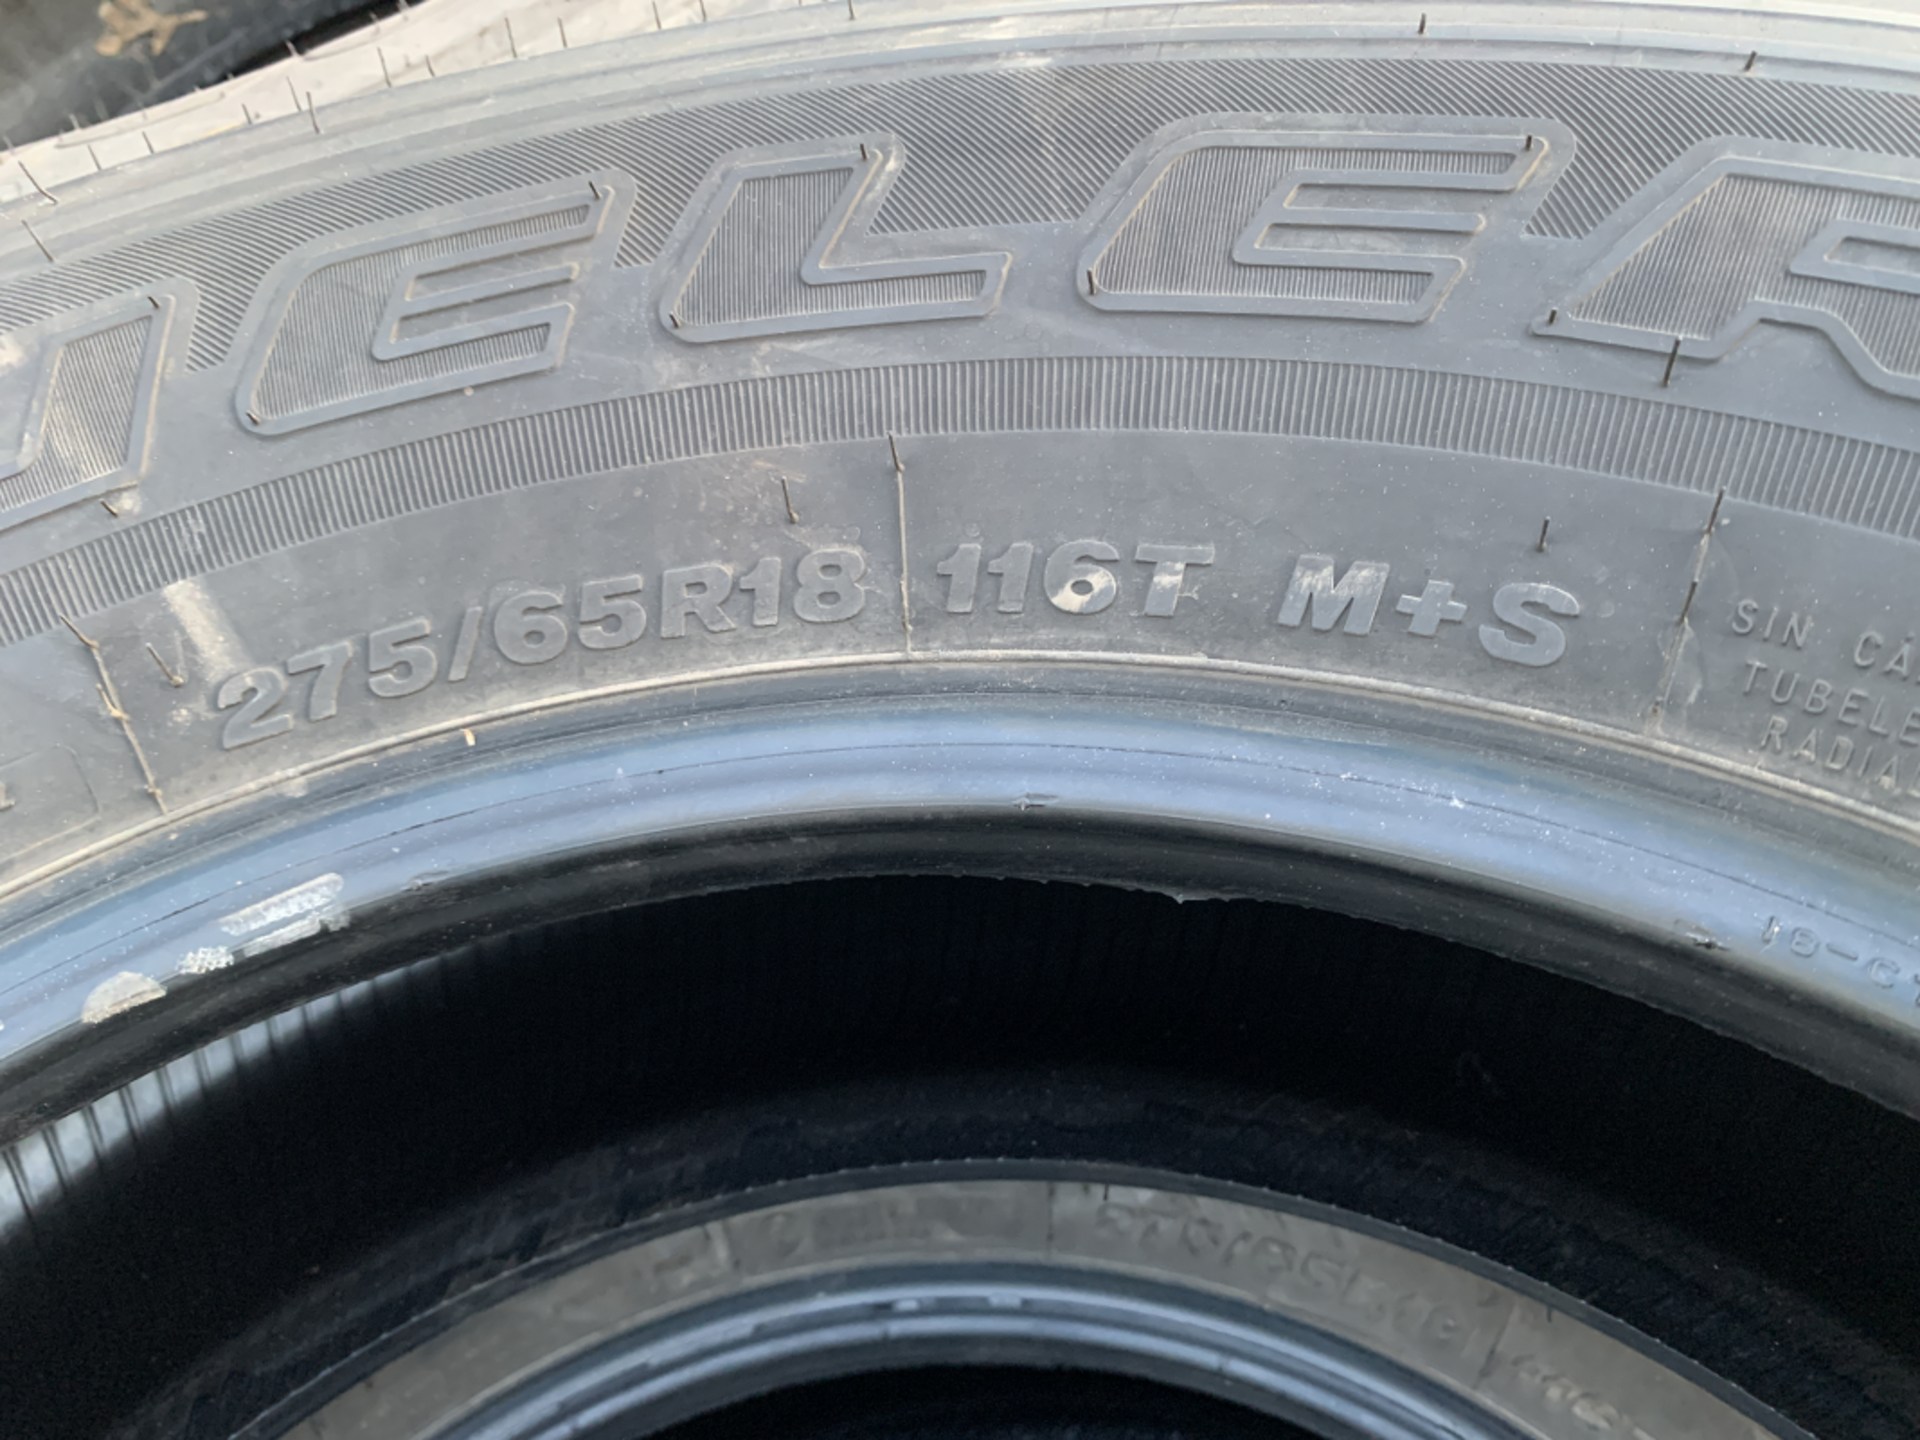 Bridgestone - Dueler H/T All Season Tires - Size 275/65/R18 - Image 4 of 5